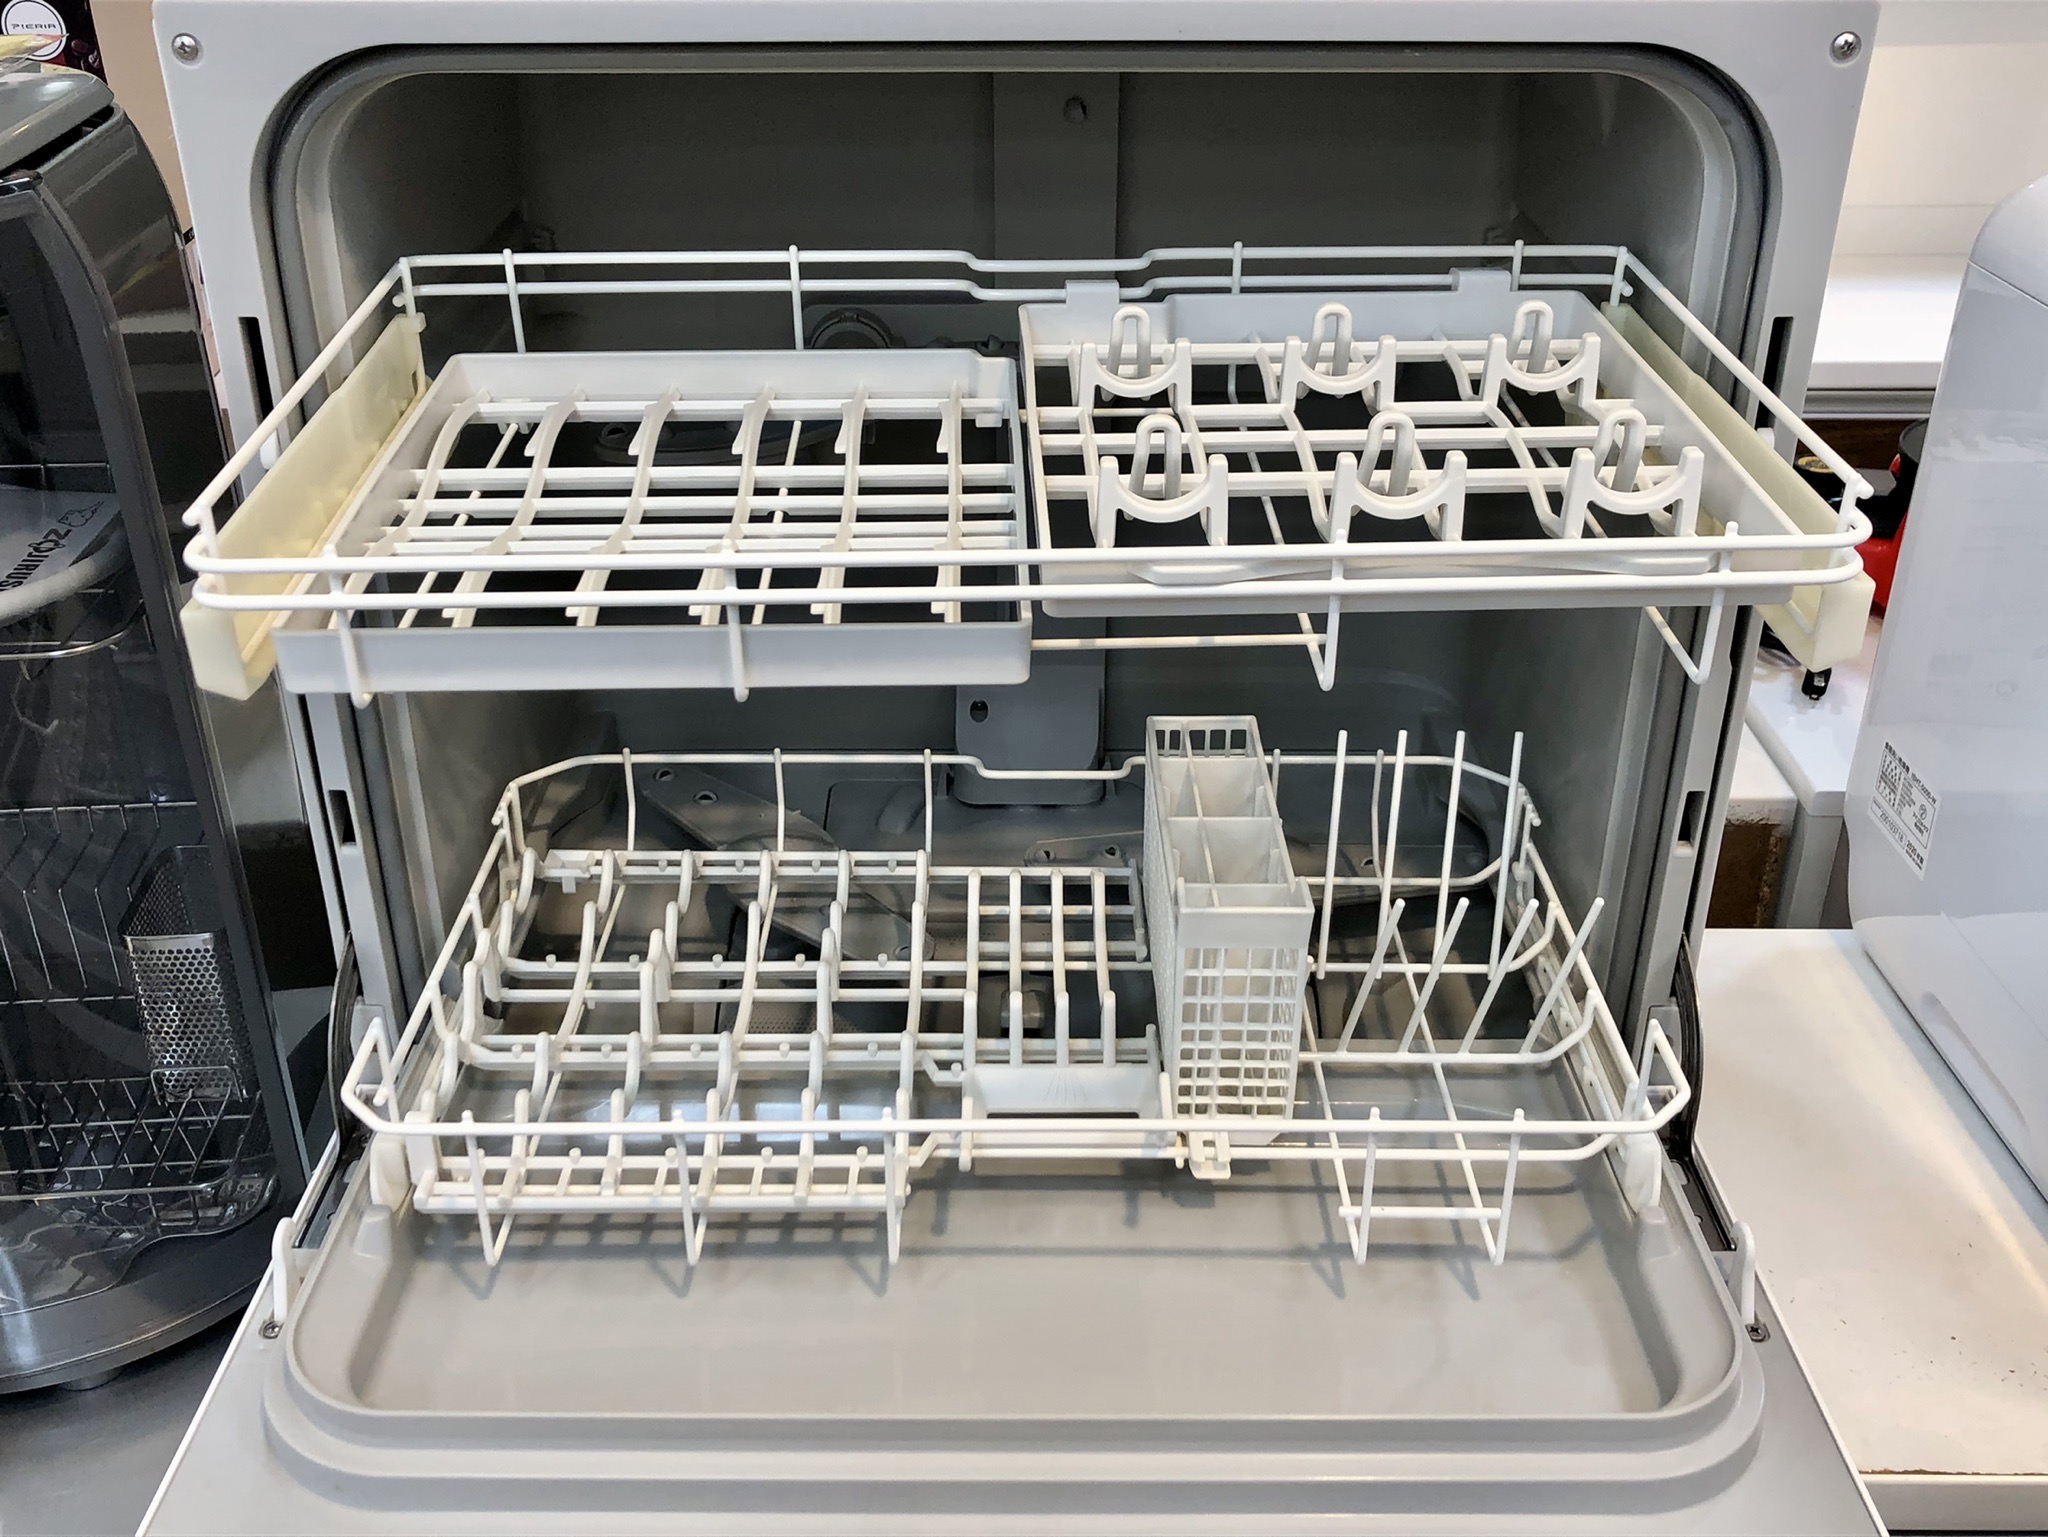 Panasonic 2018年製 食器洗い乾燥機 NP-TA1 買取しました。 | 愛知と岐阜のリサイクルショップ 再良市場